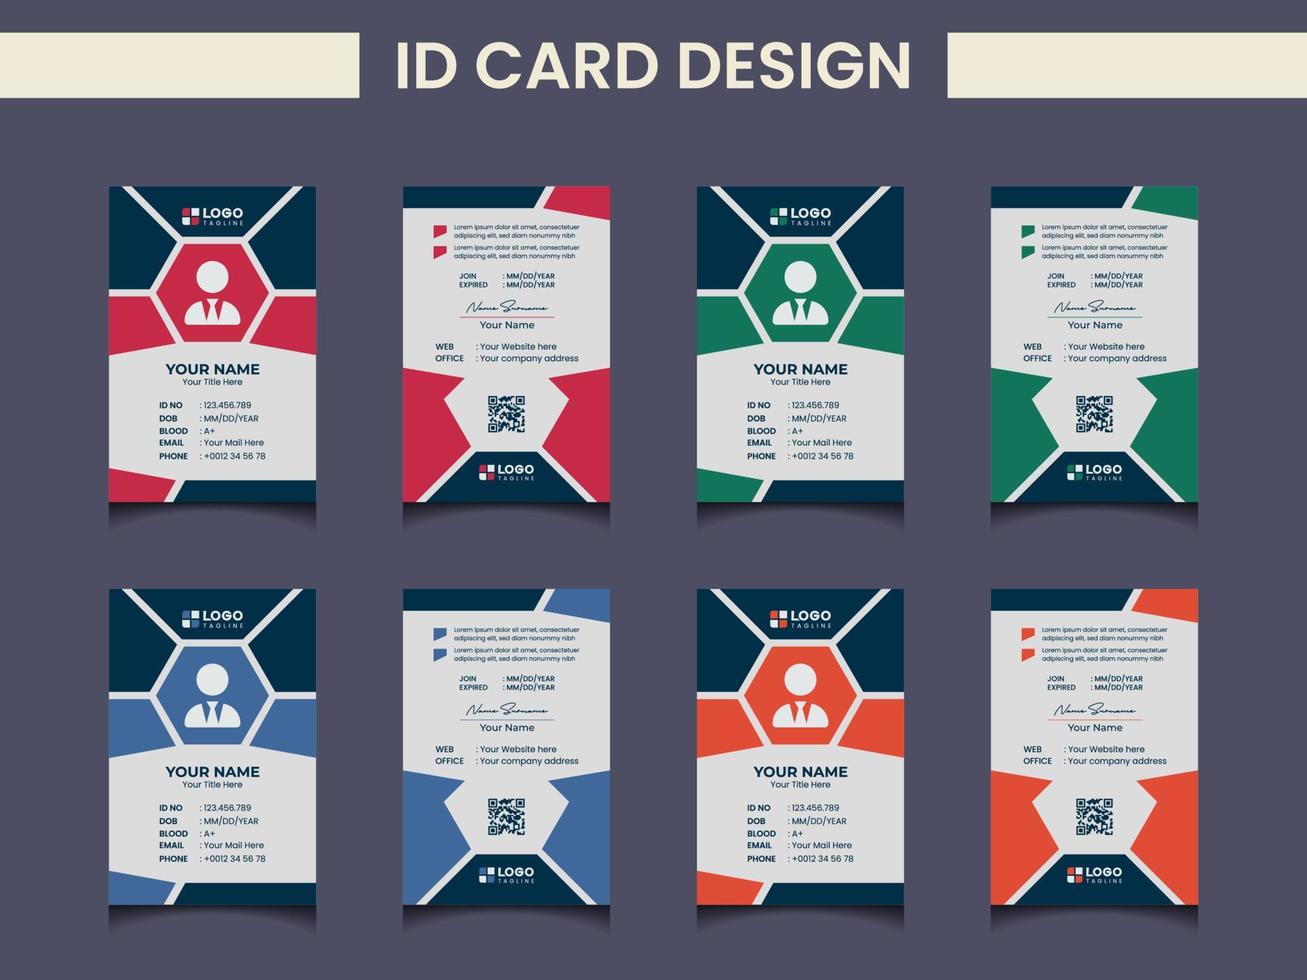 kreative moderne ID-Karten-Designvorlage vektor